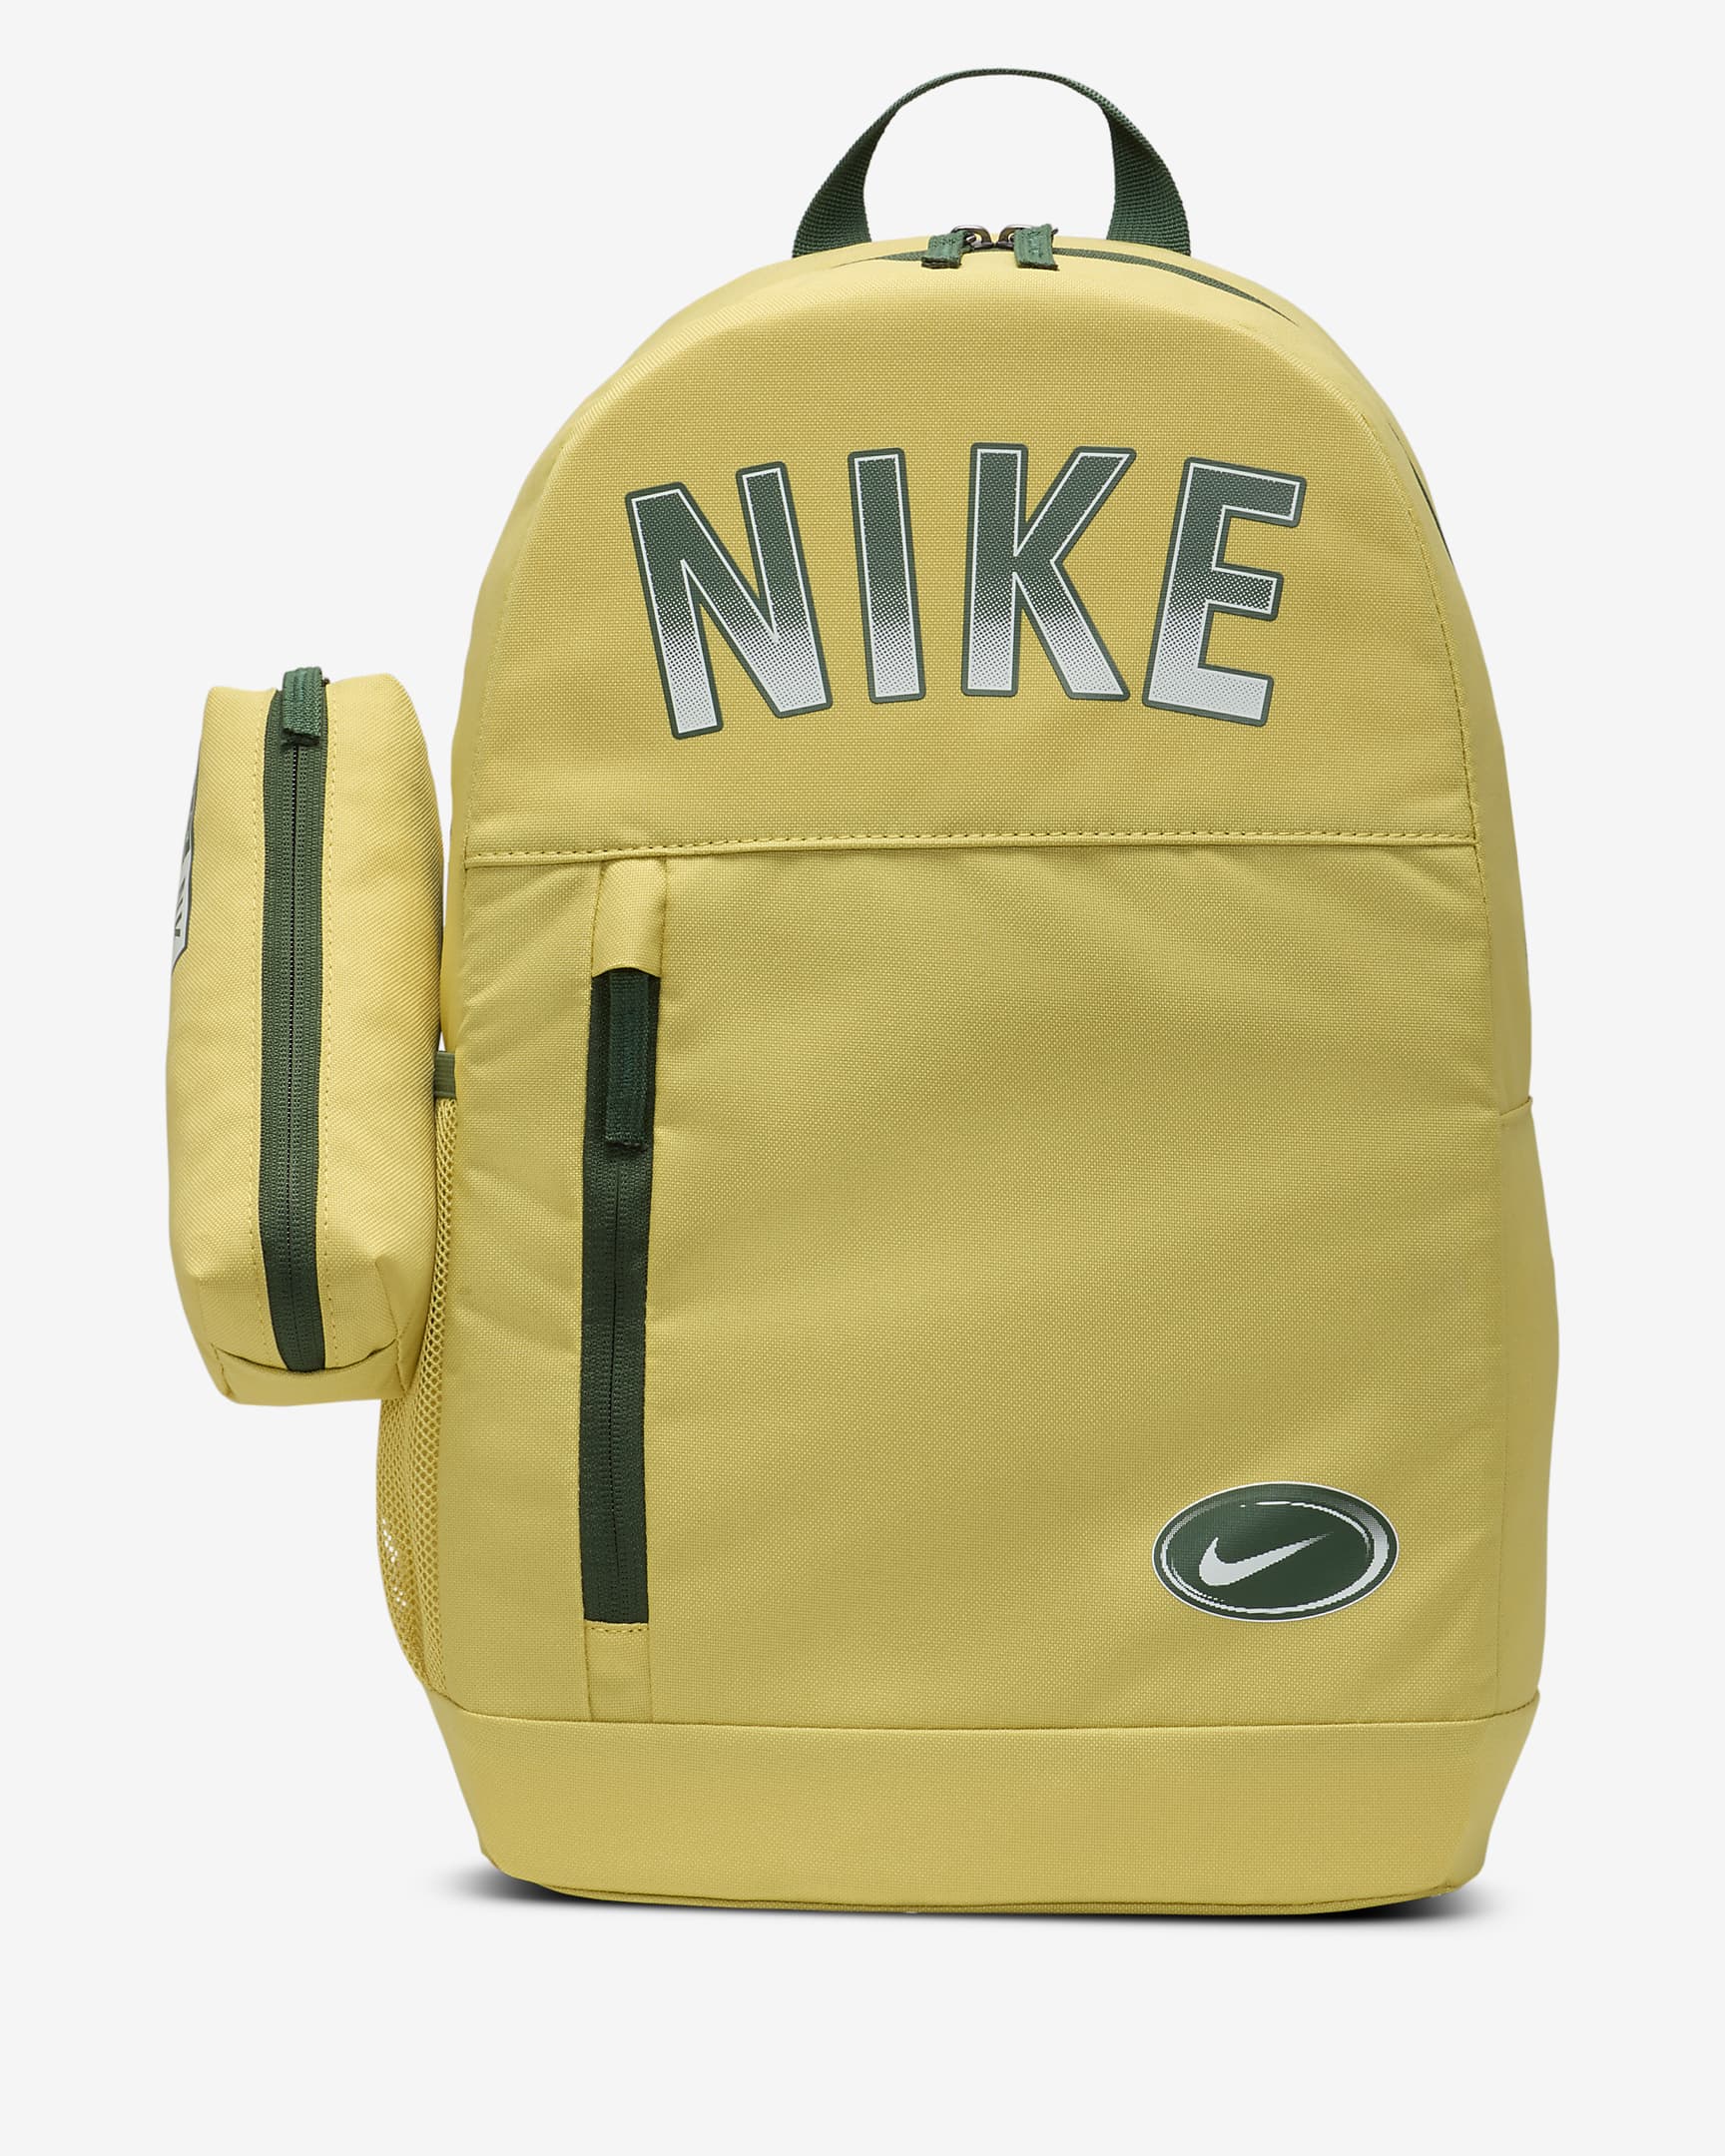 Ryggsäck Nike för barn (20 l) - Saturn Gold/Fir/Fir